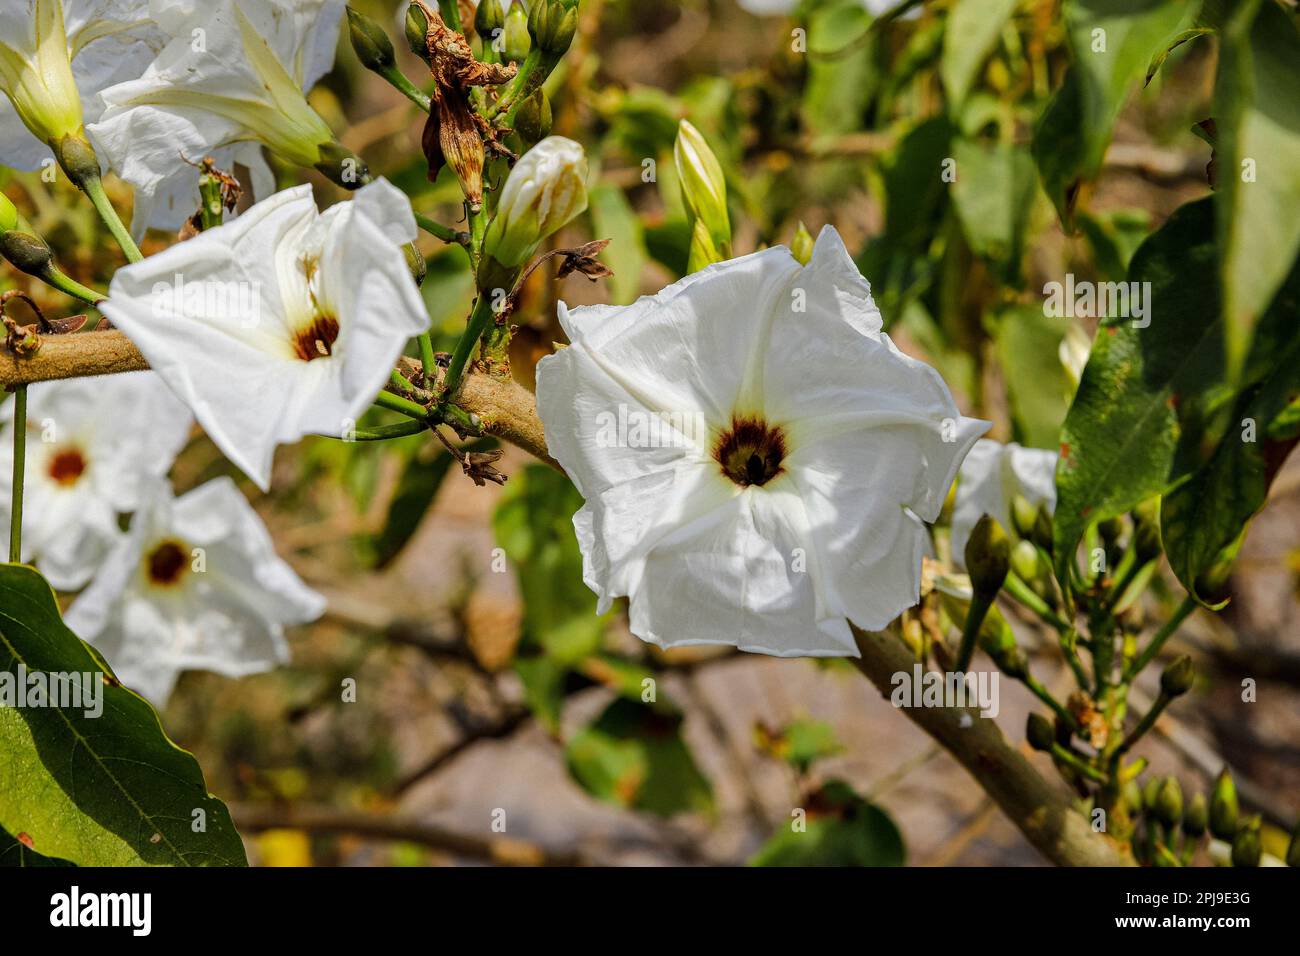 the blossom of ipomoea arborescens, tree morning glory, cazahuatl or cazahuate Stock Photo